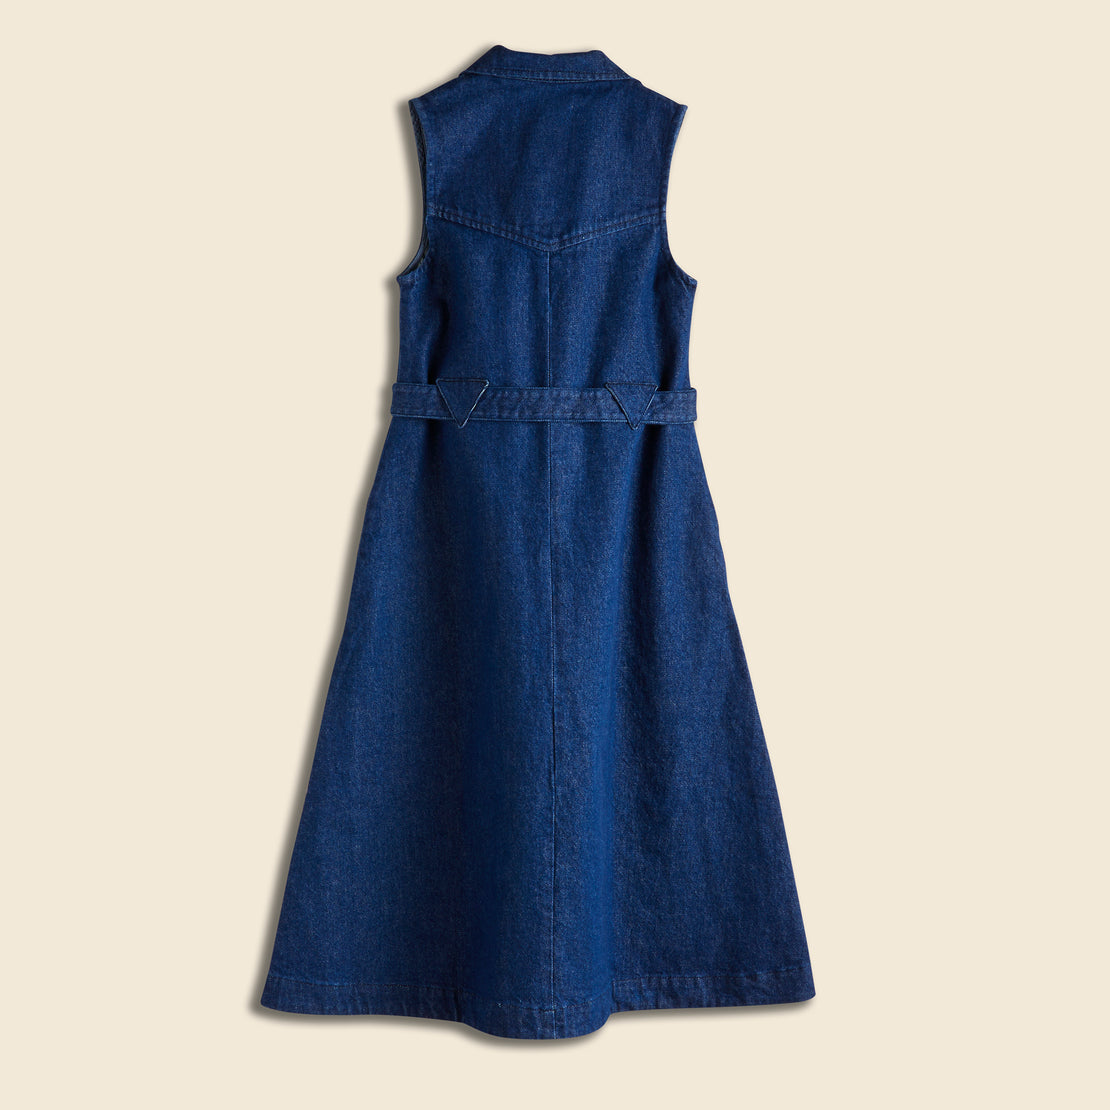 Triangle Loop Dress - Dark Rinse Denim - Carleen - STAG Provisions - W - Onepiece - Dress